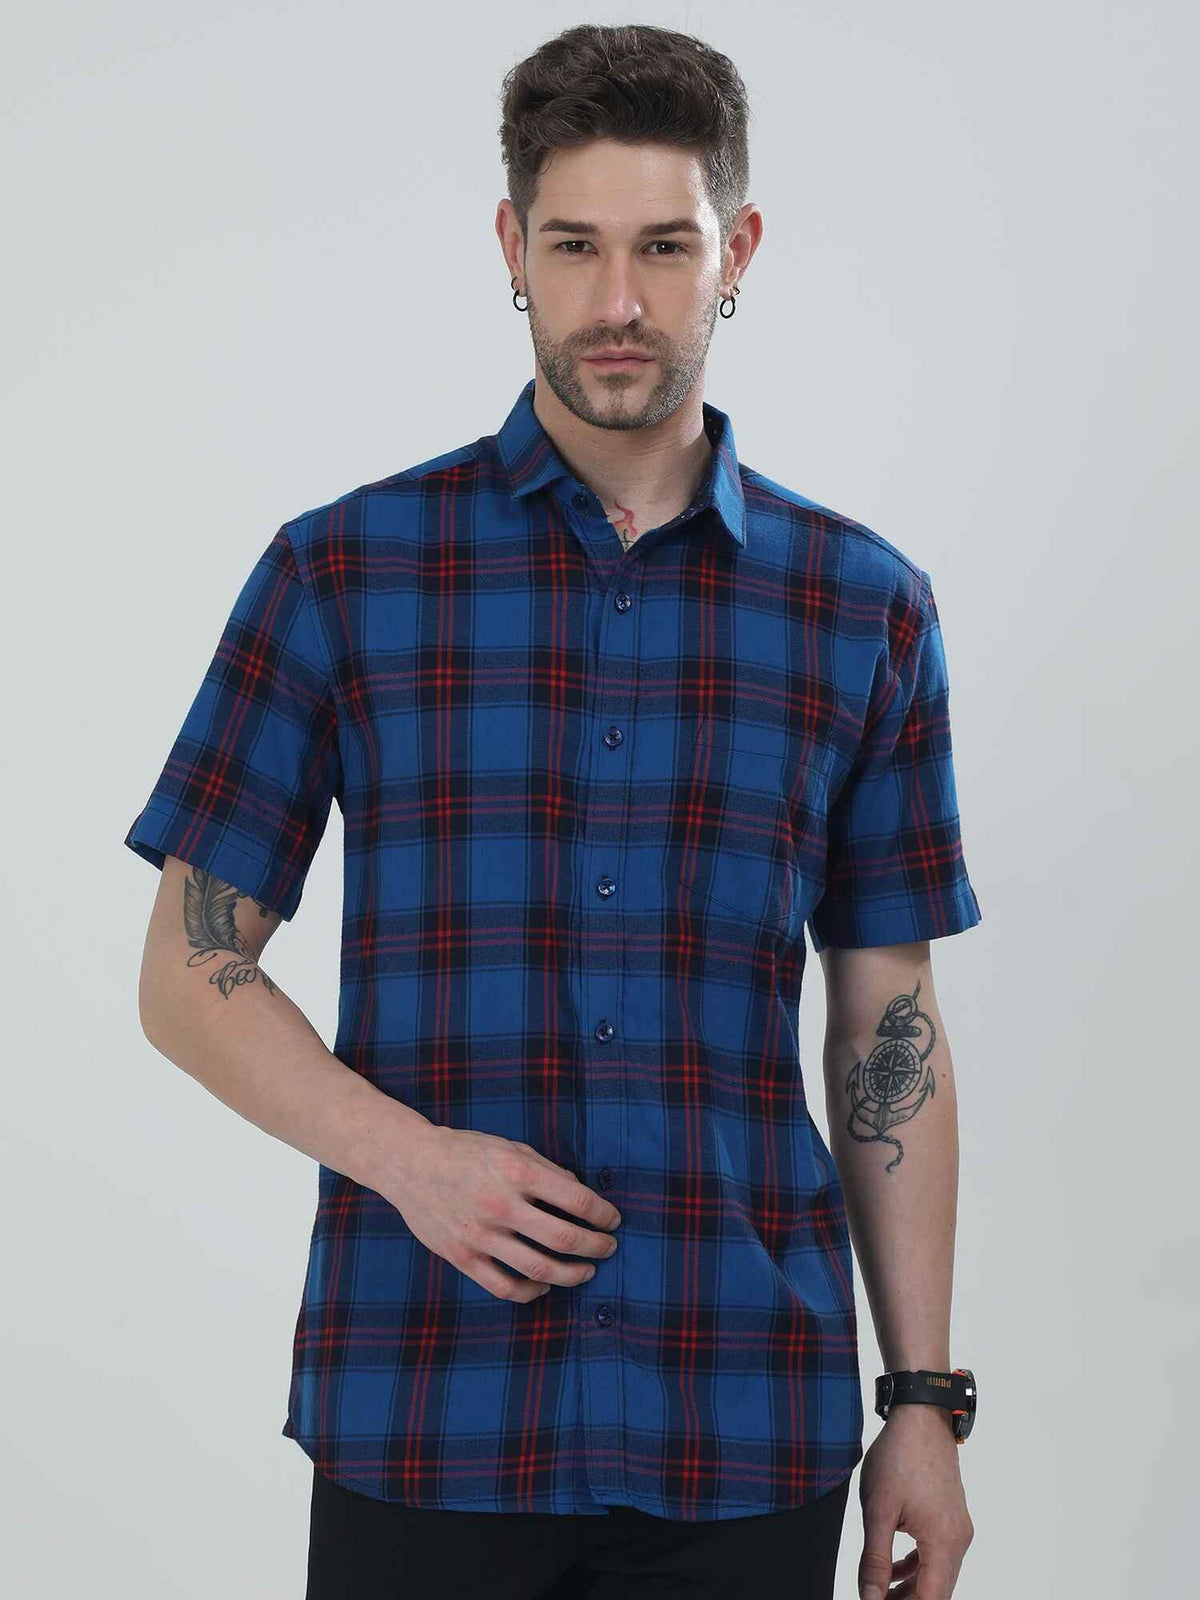 Blue Checkered Half Shirt - Guniaa Fashions